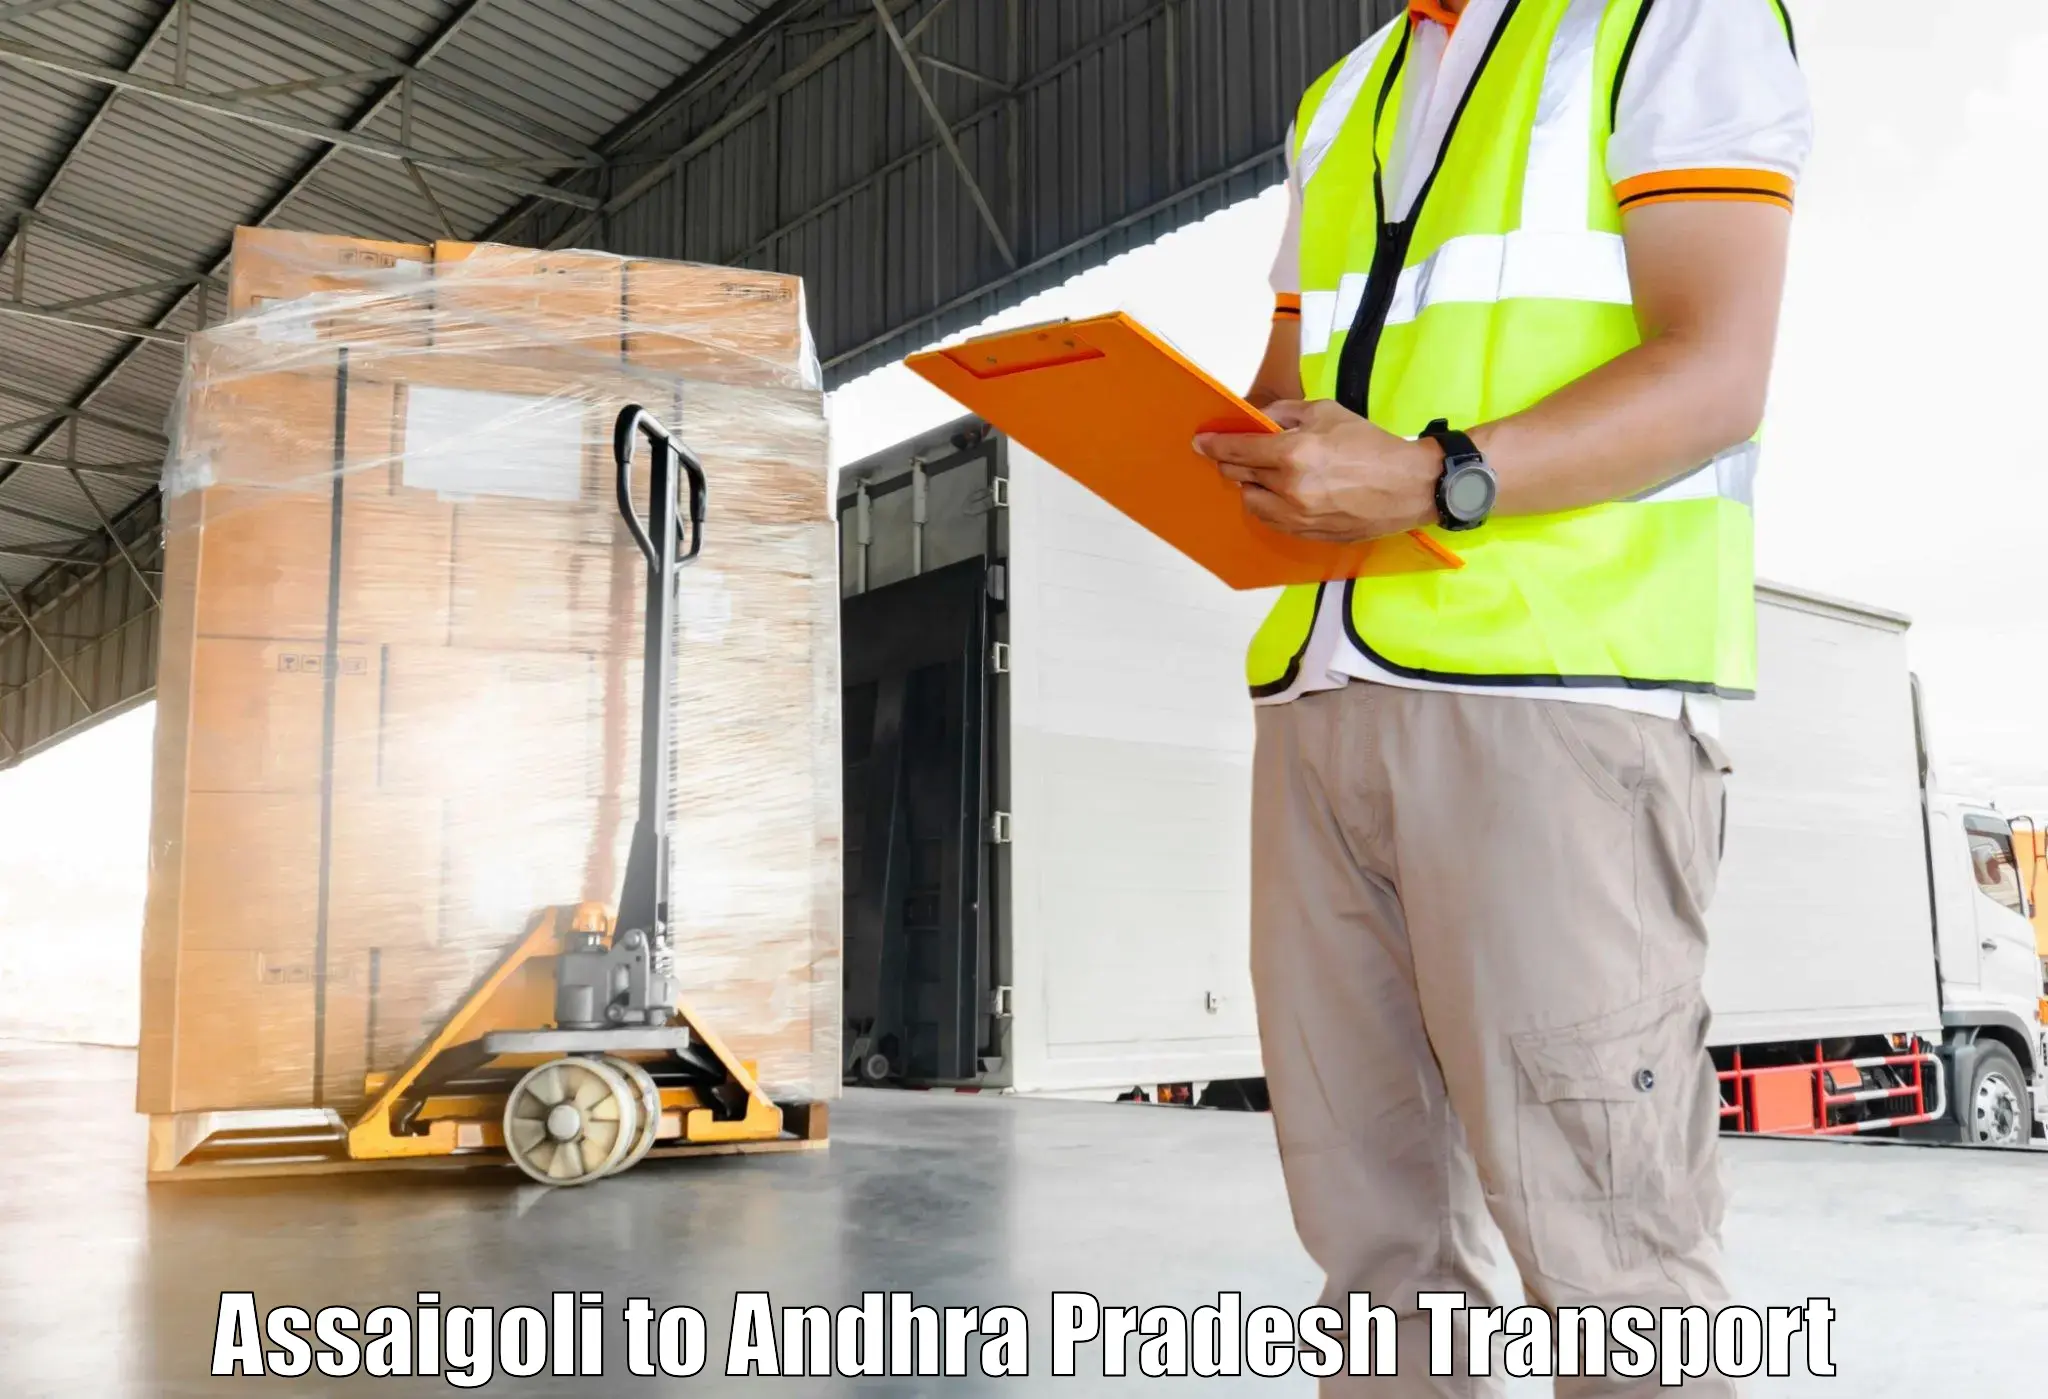 Vehicle transport services Assaigoli to Kudair